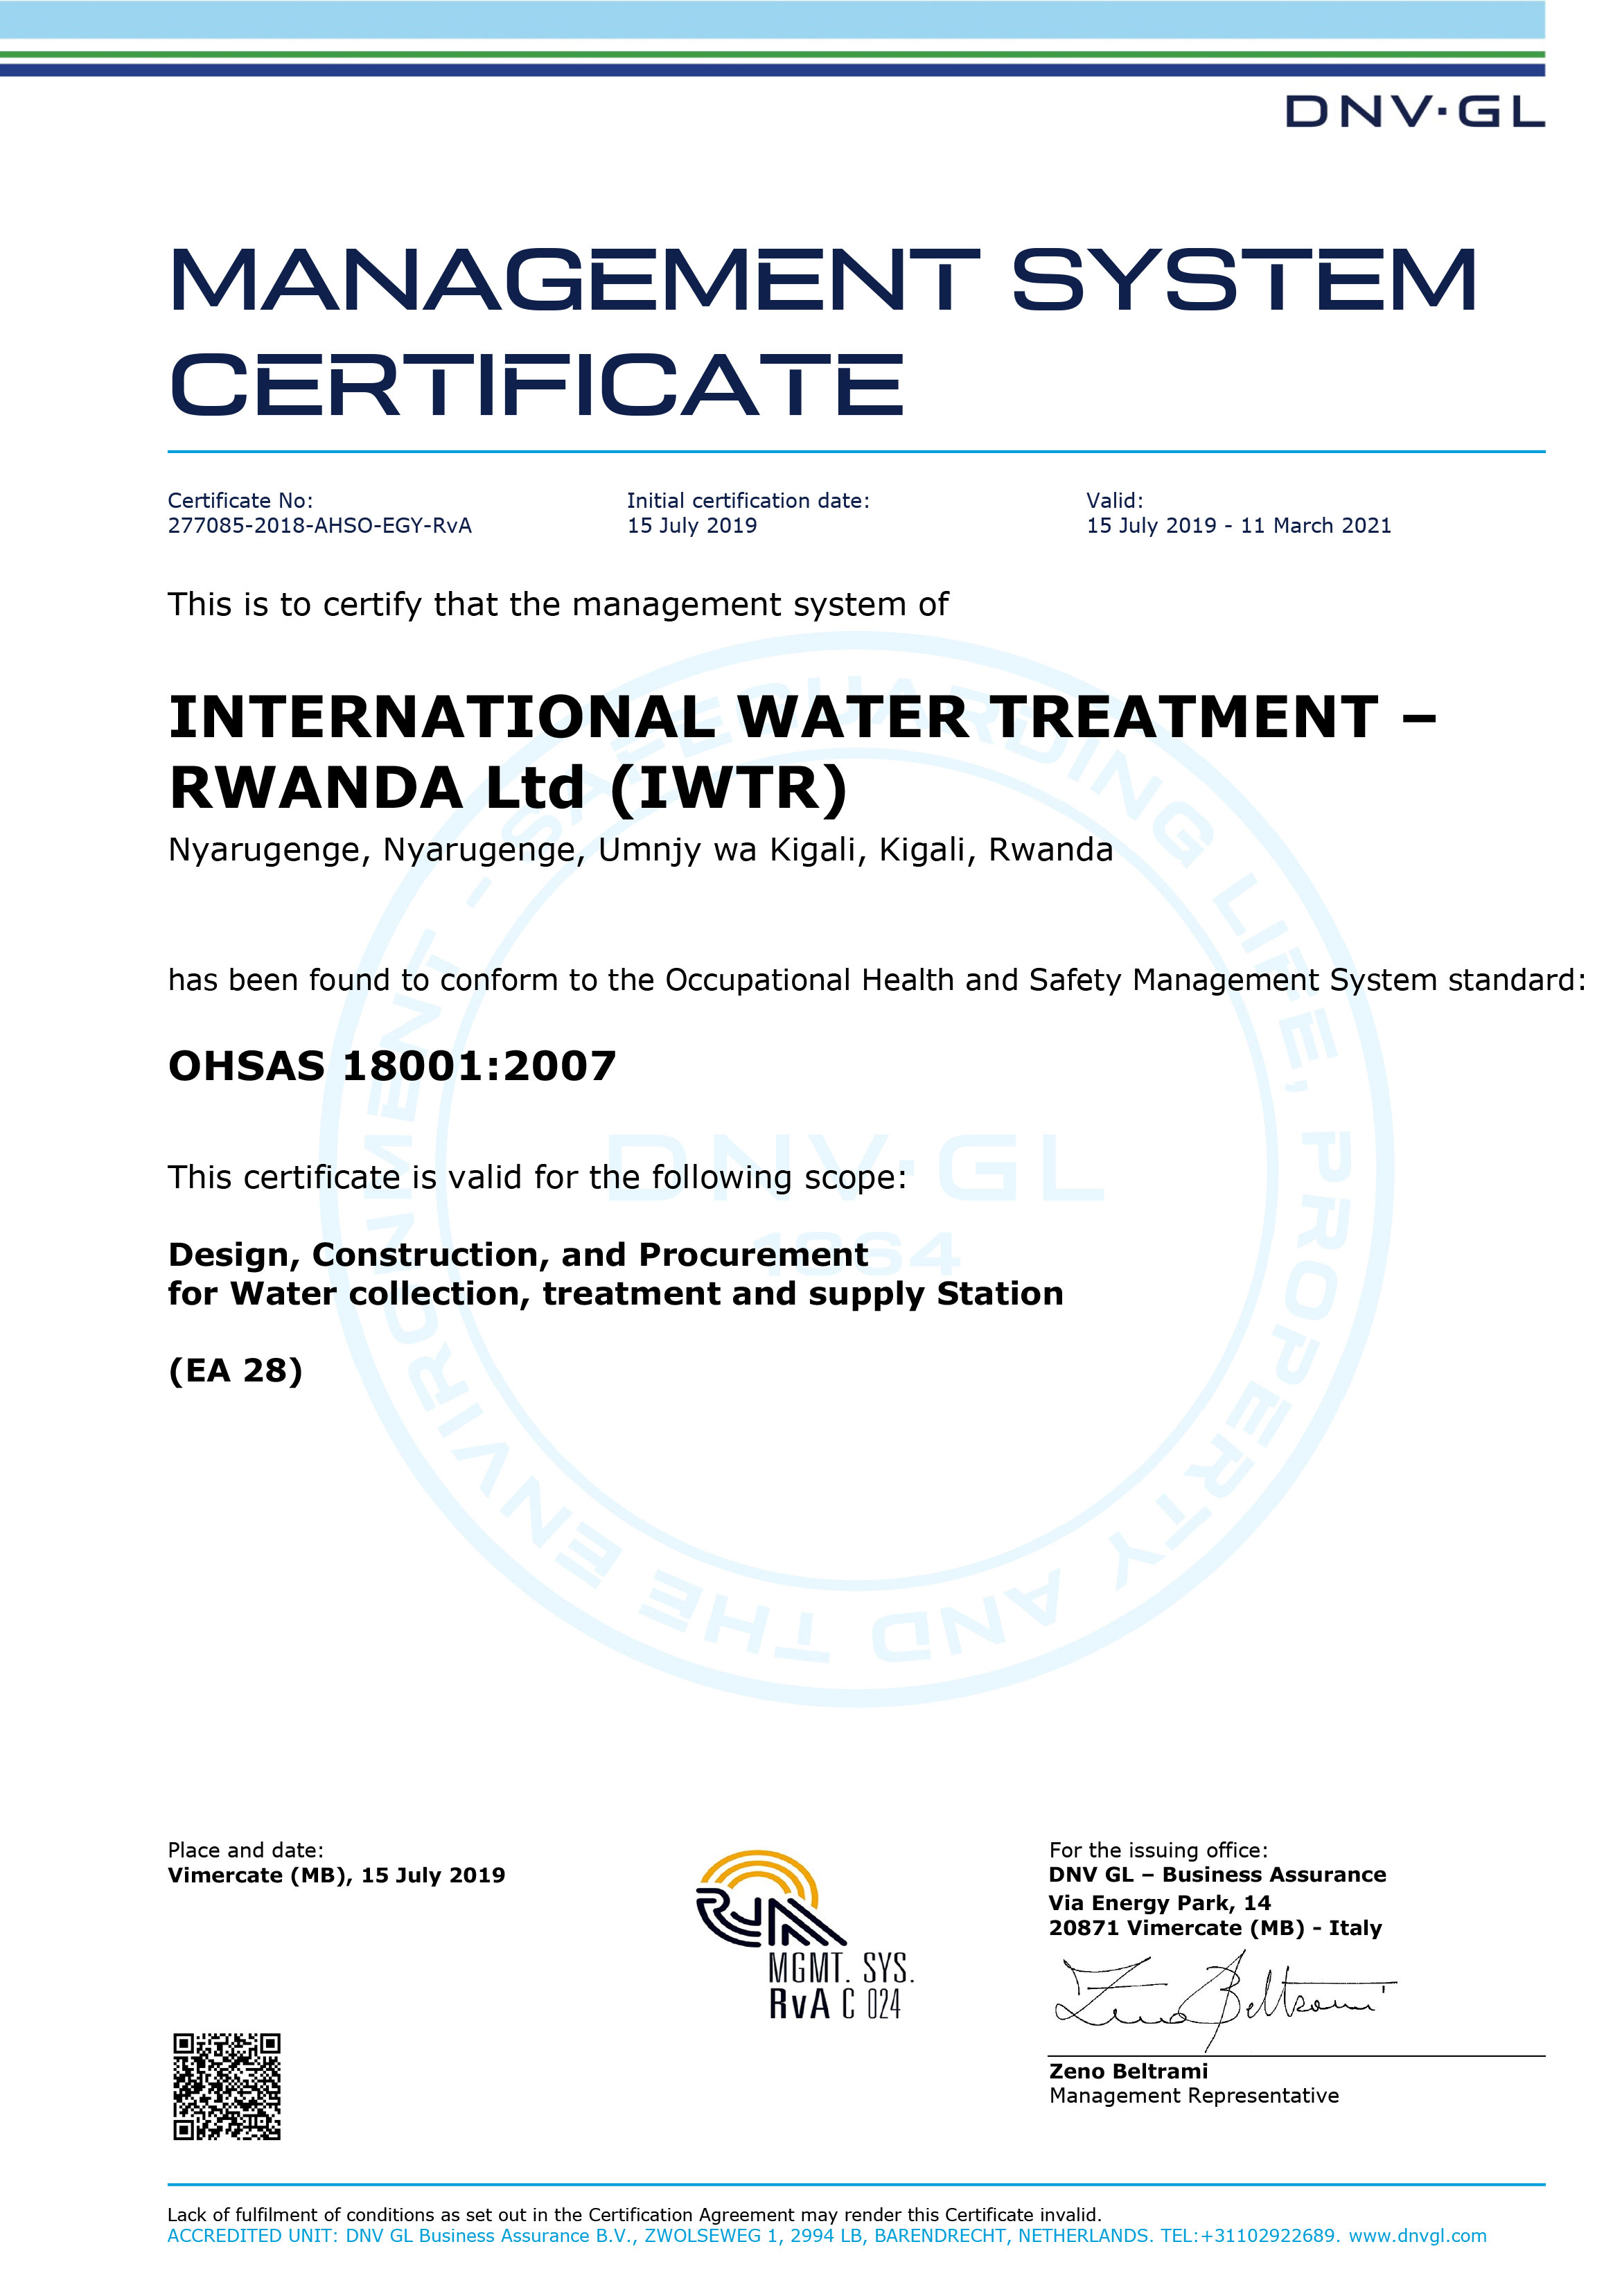 RWANDA Ltd (IWTR) – OHSAS